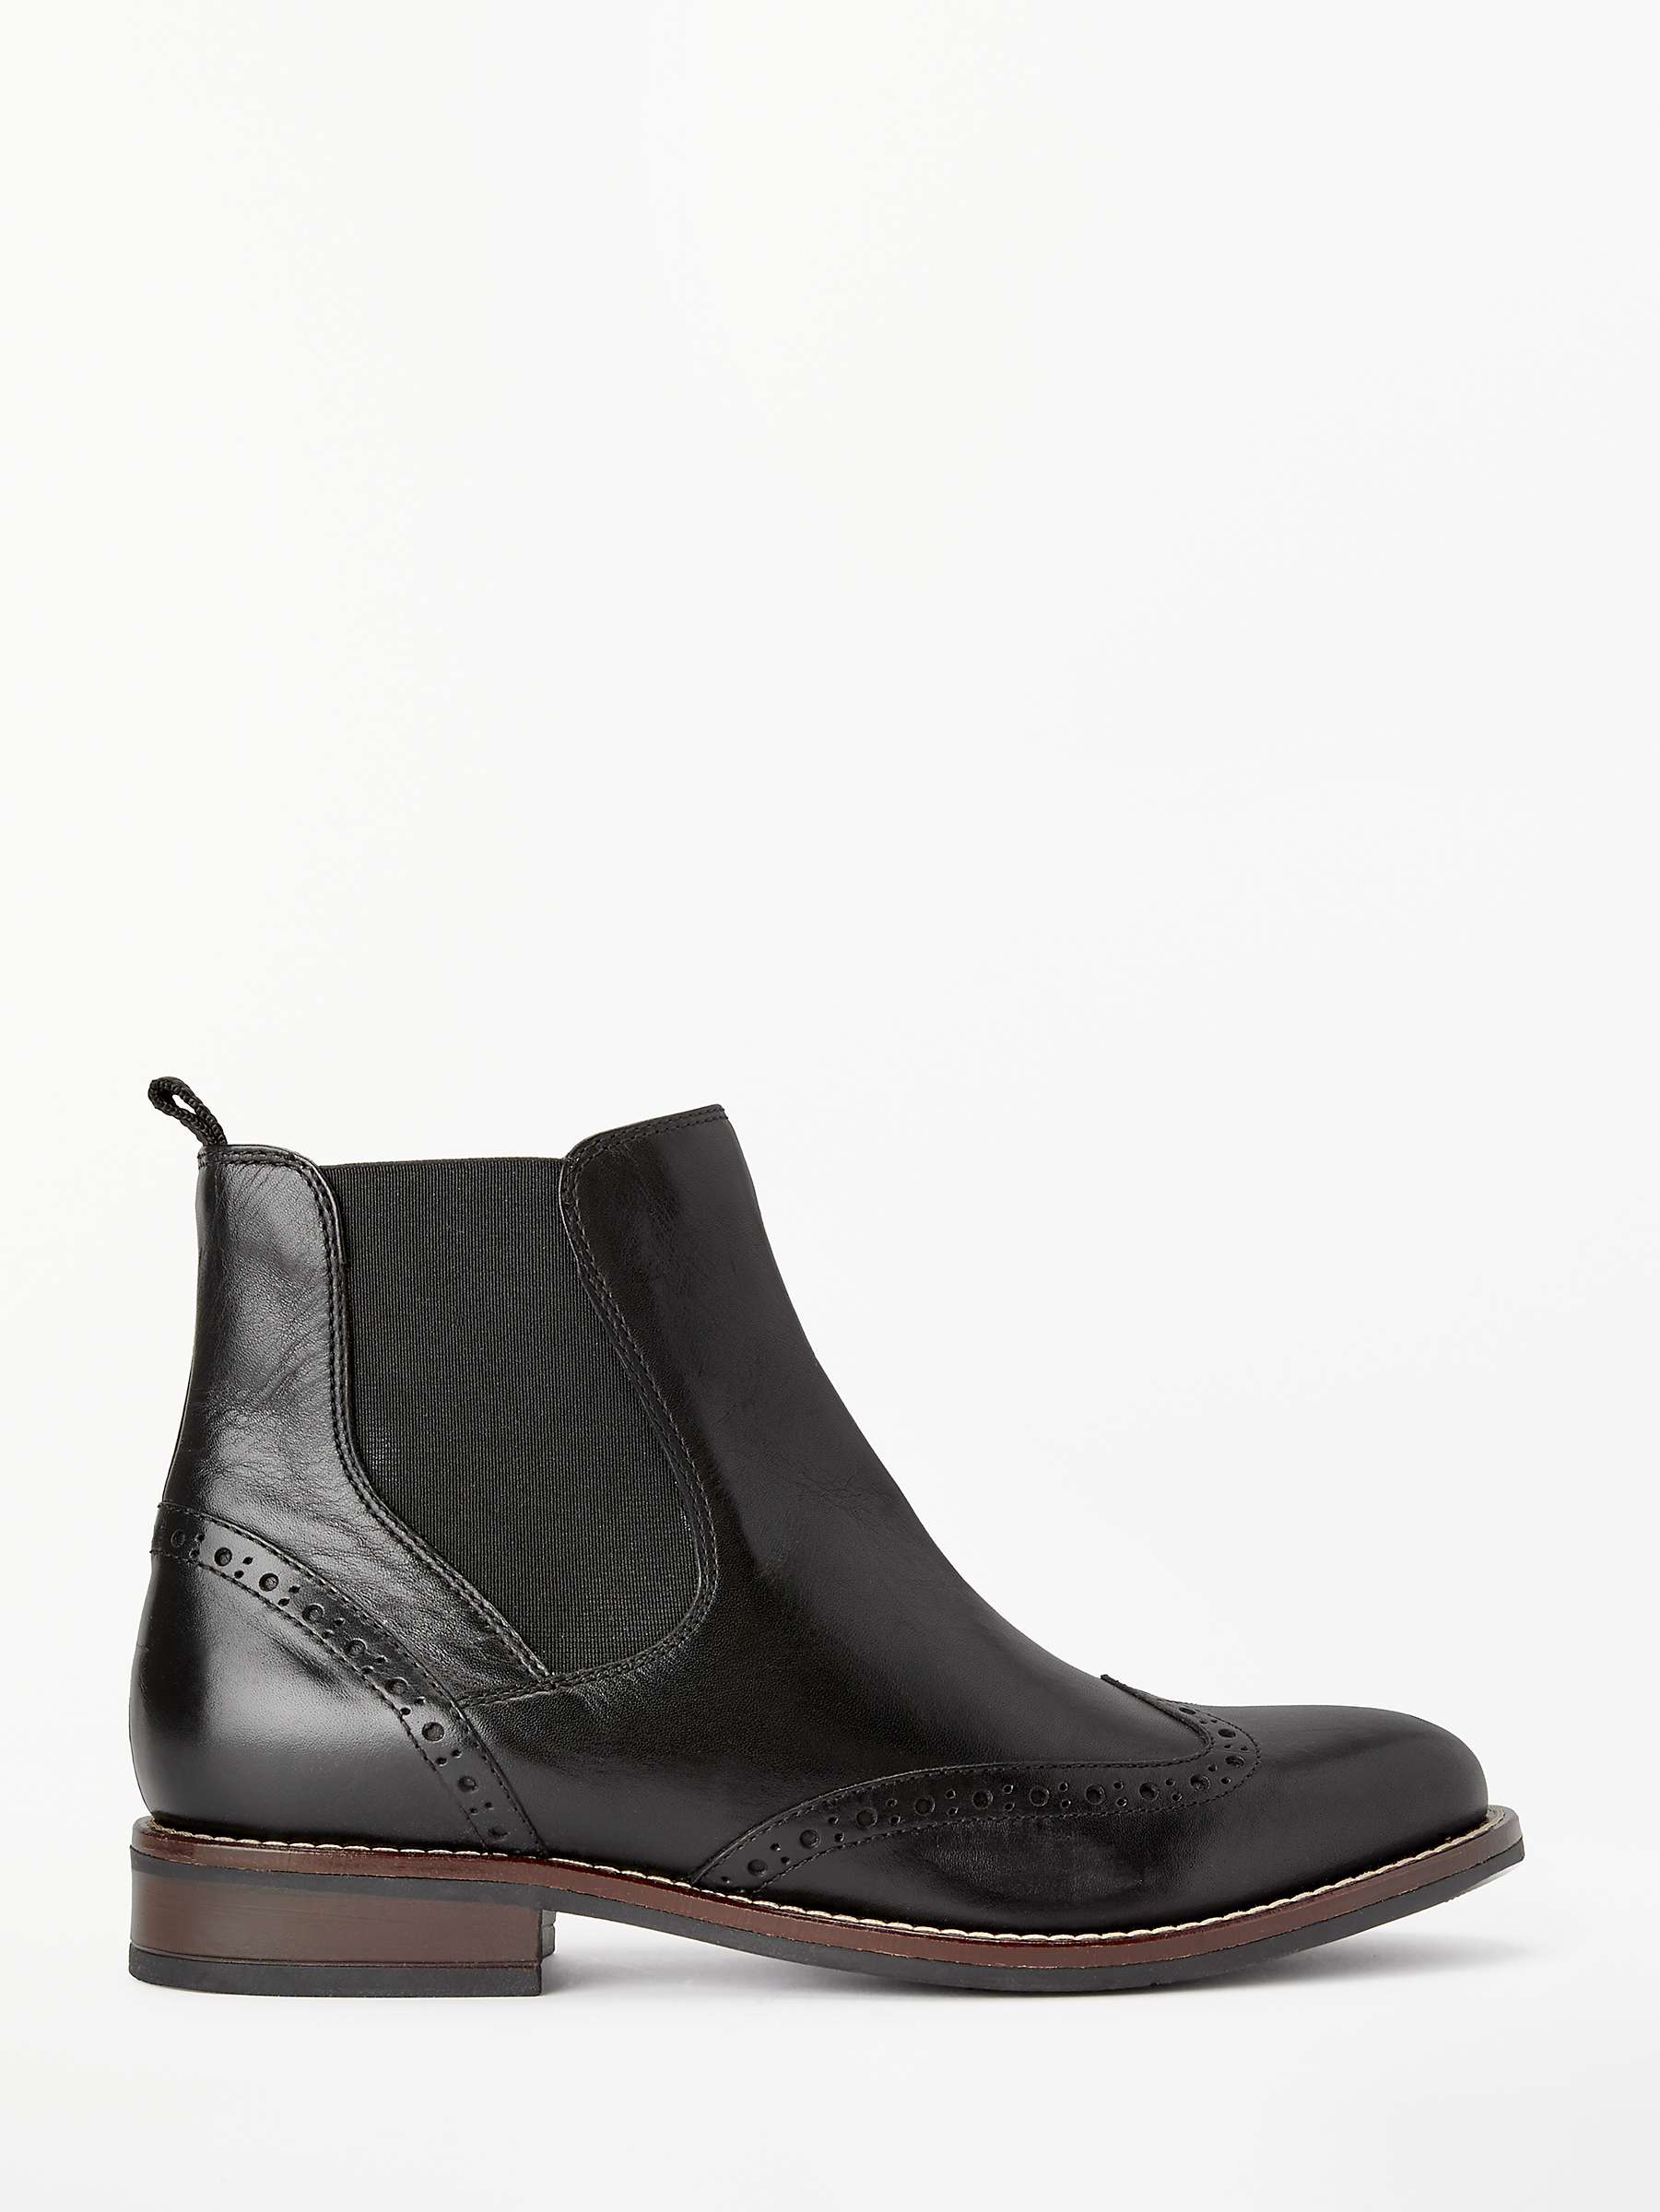 John Lewis Phoebe Brogue Detail Chelsea Boots, Black Leather at John ...